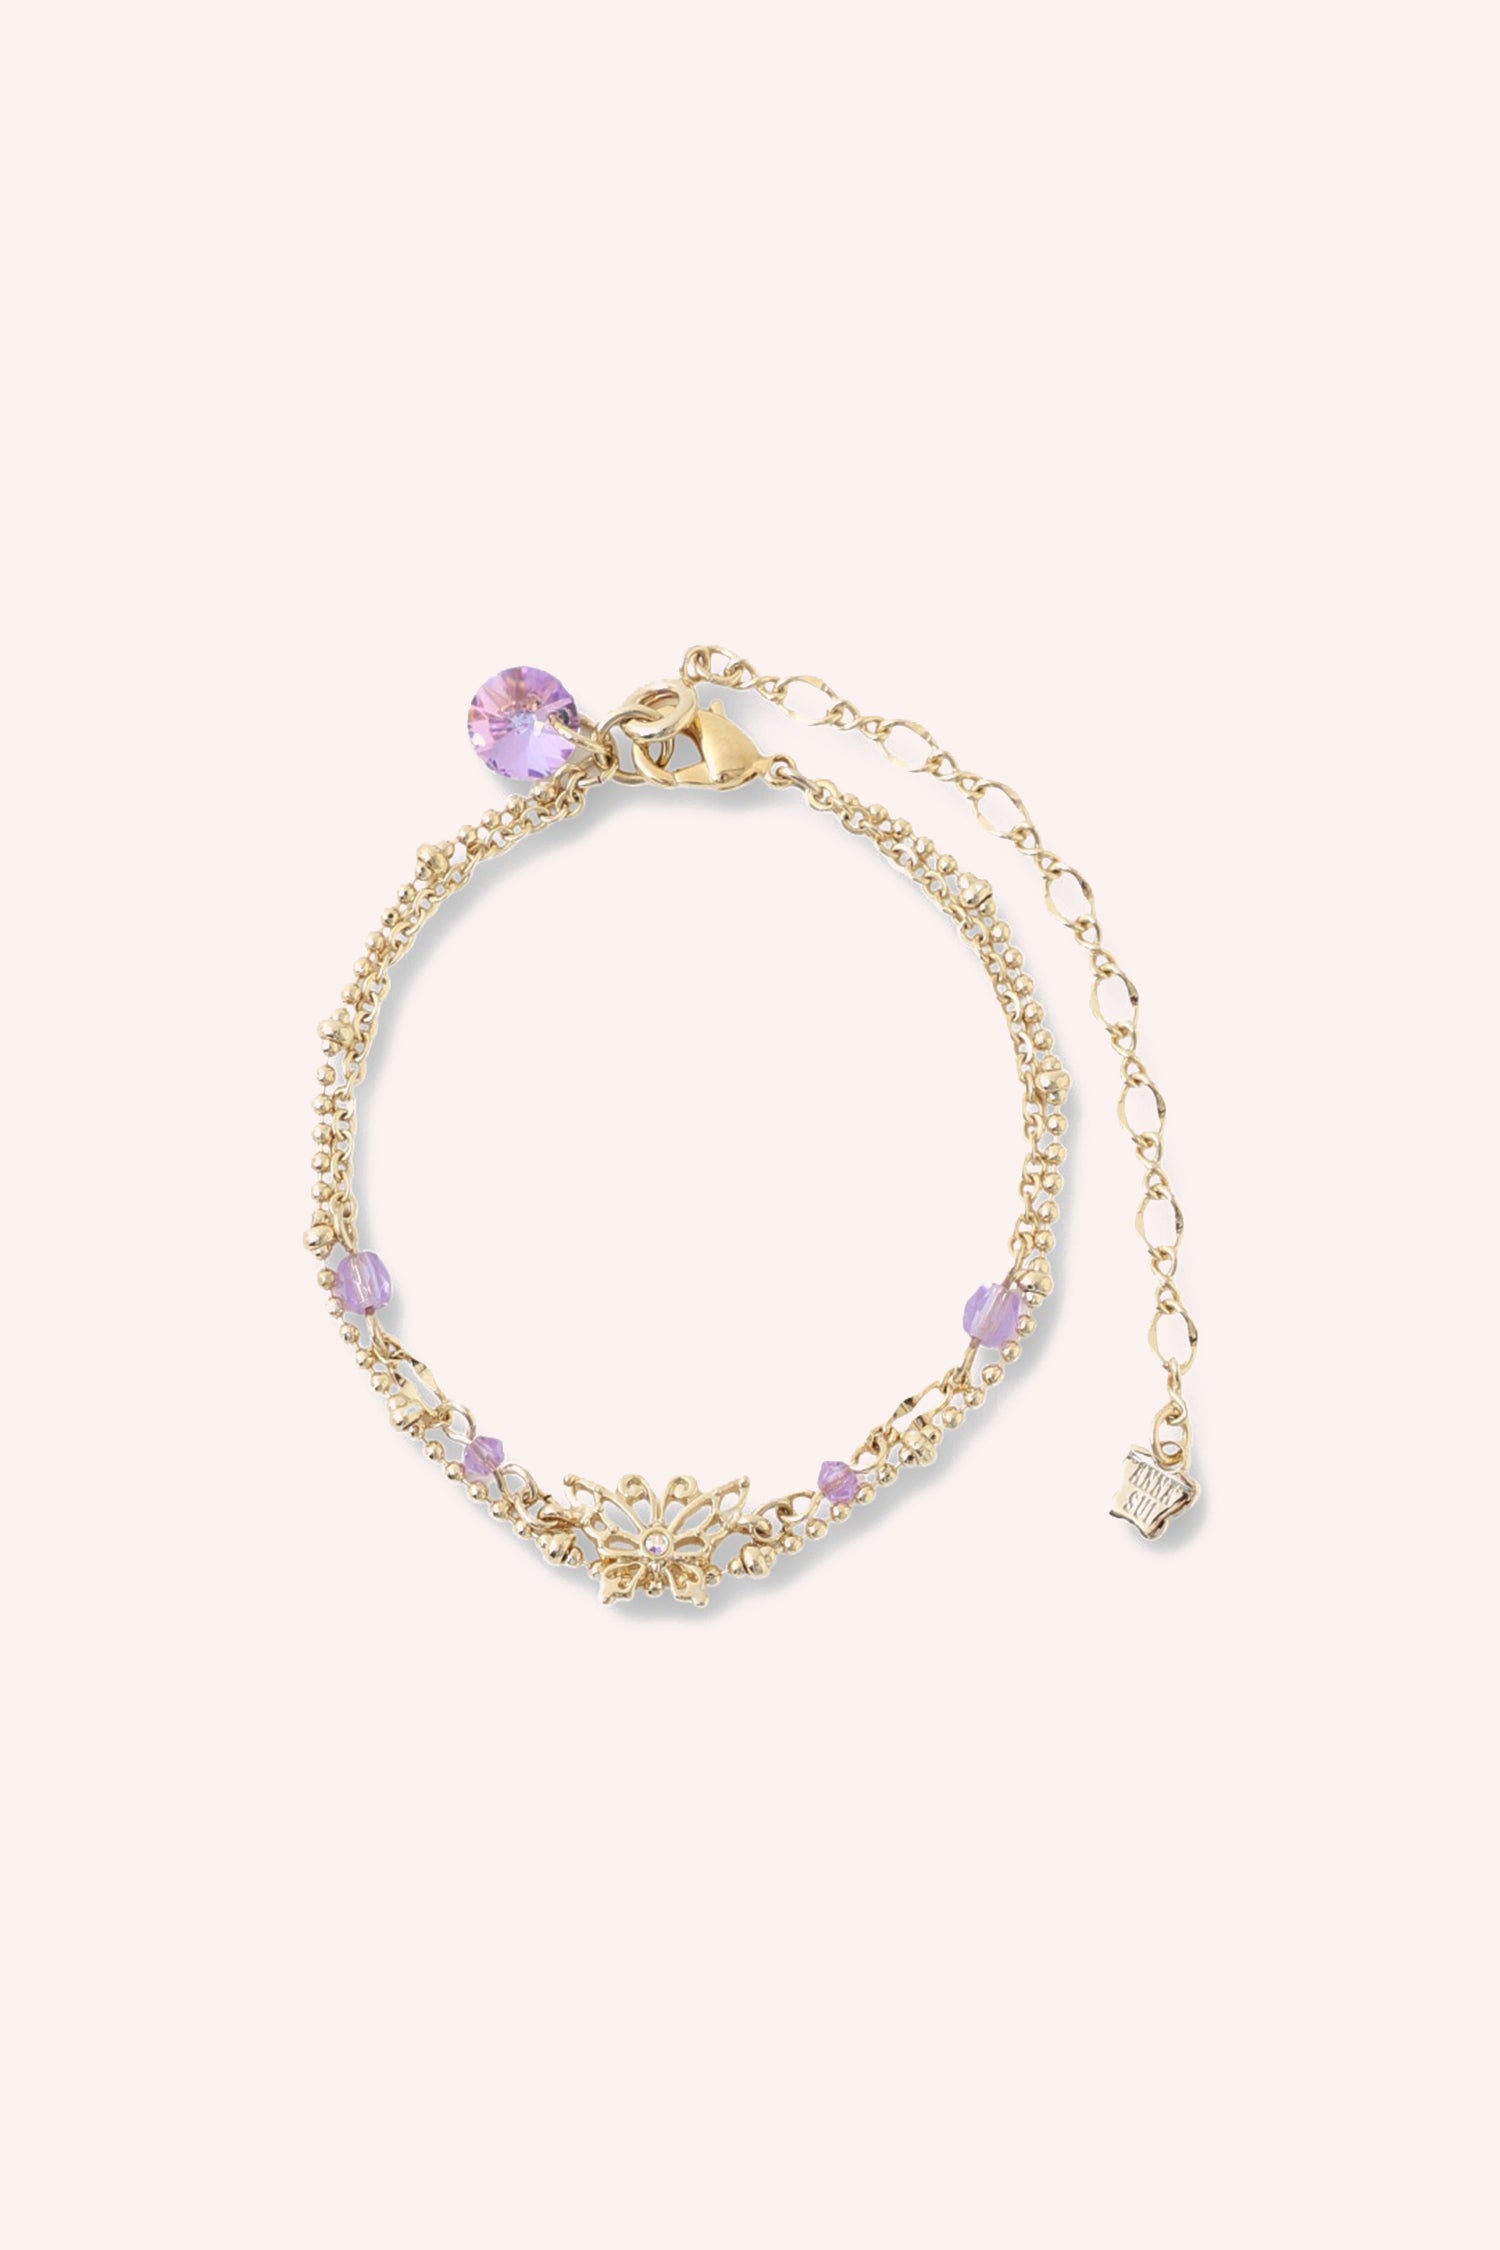 Aquamarine Butterfly Bracelet, fairy-like butterfly bracelet with pink gemstones, 